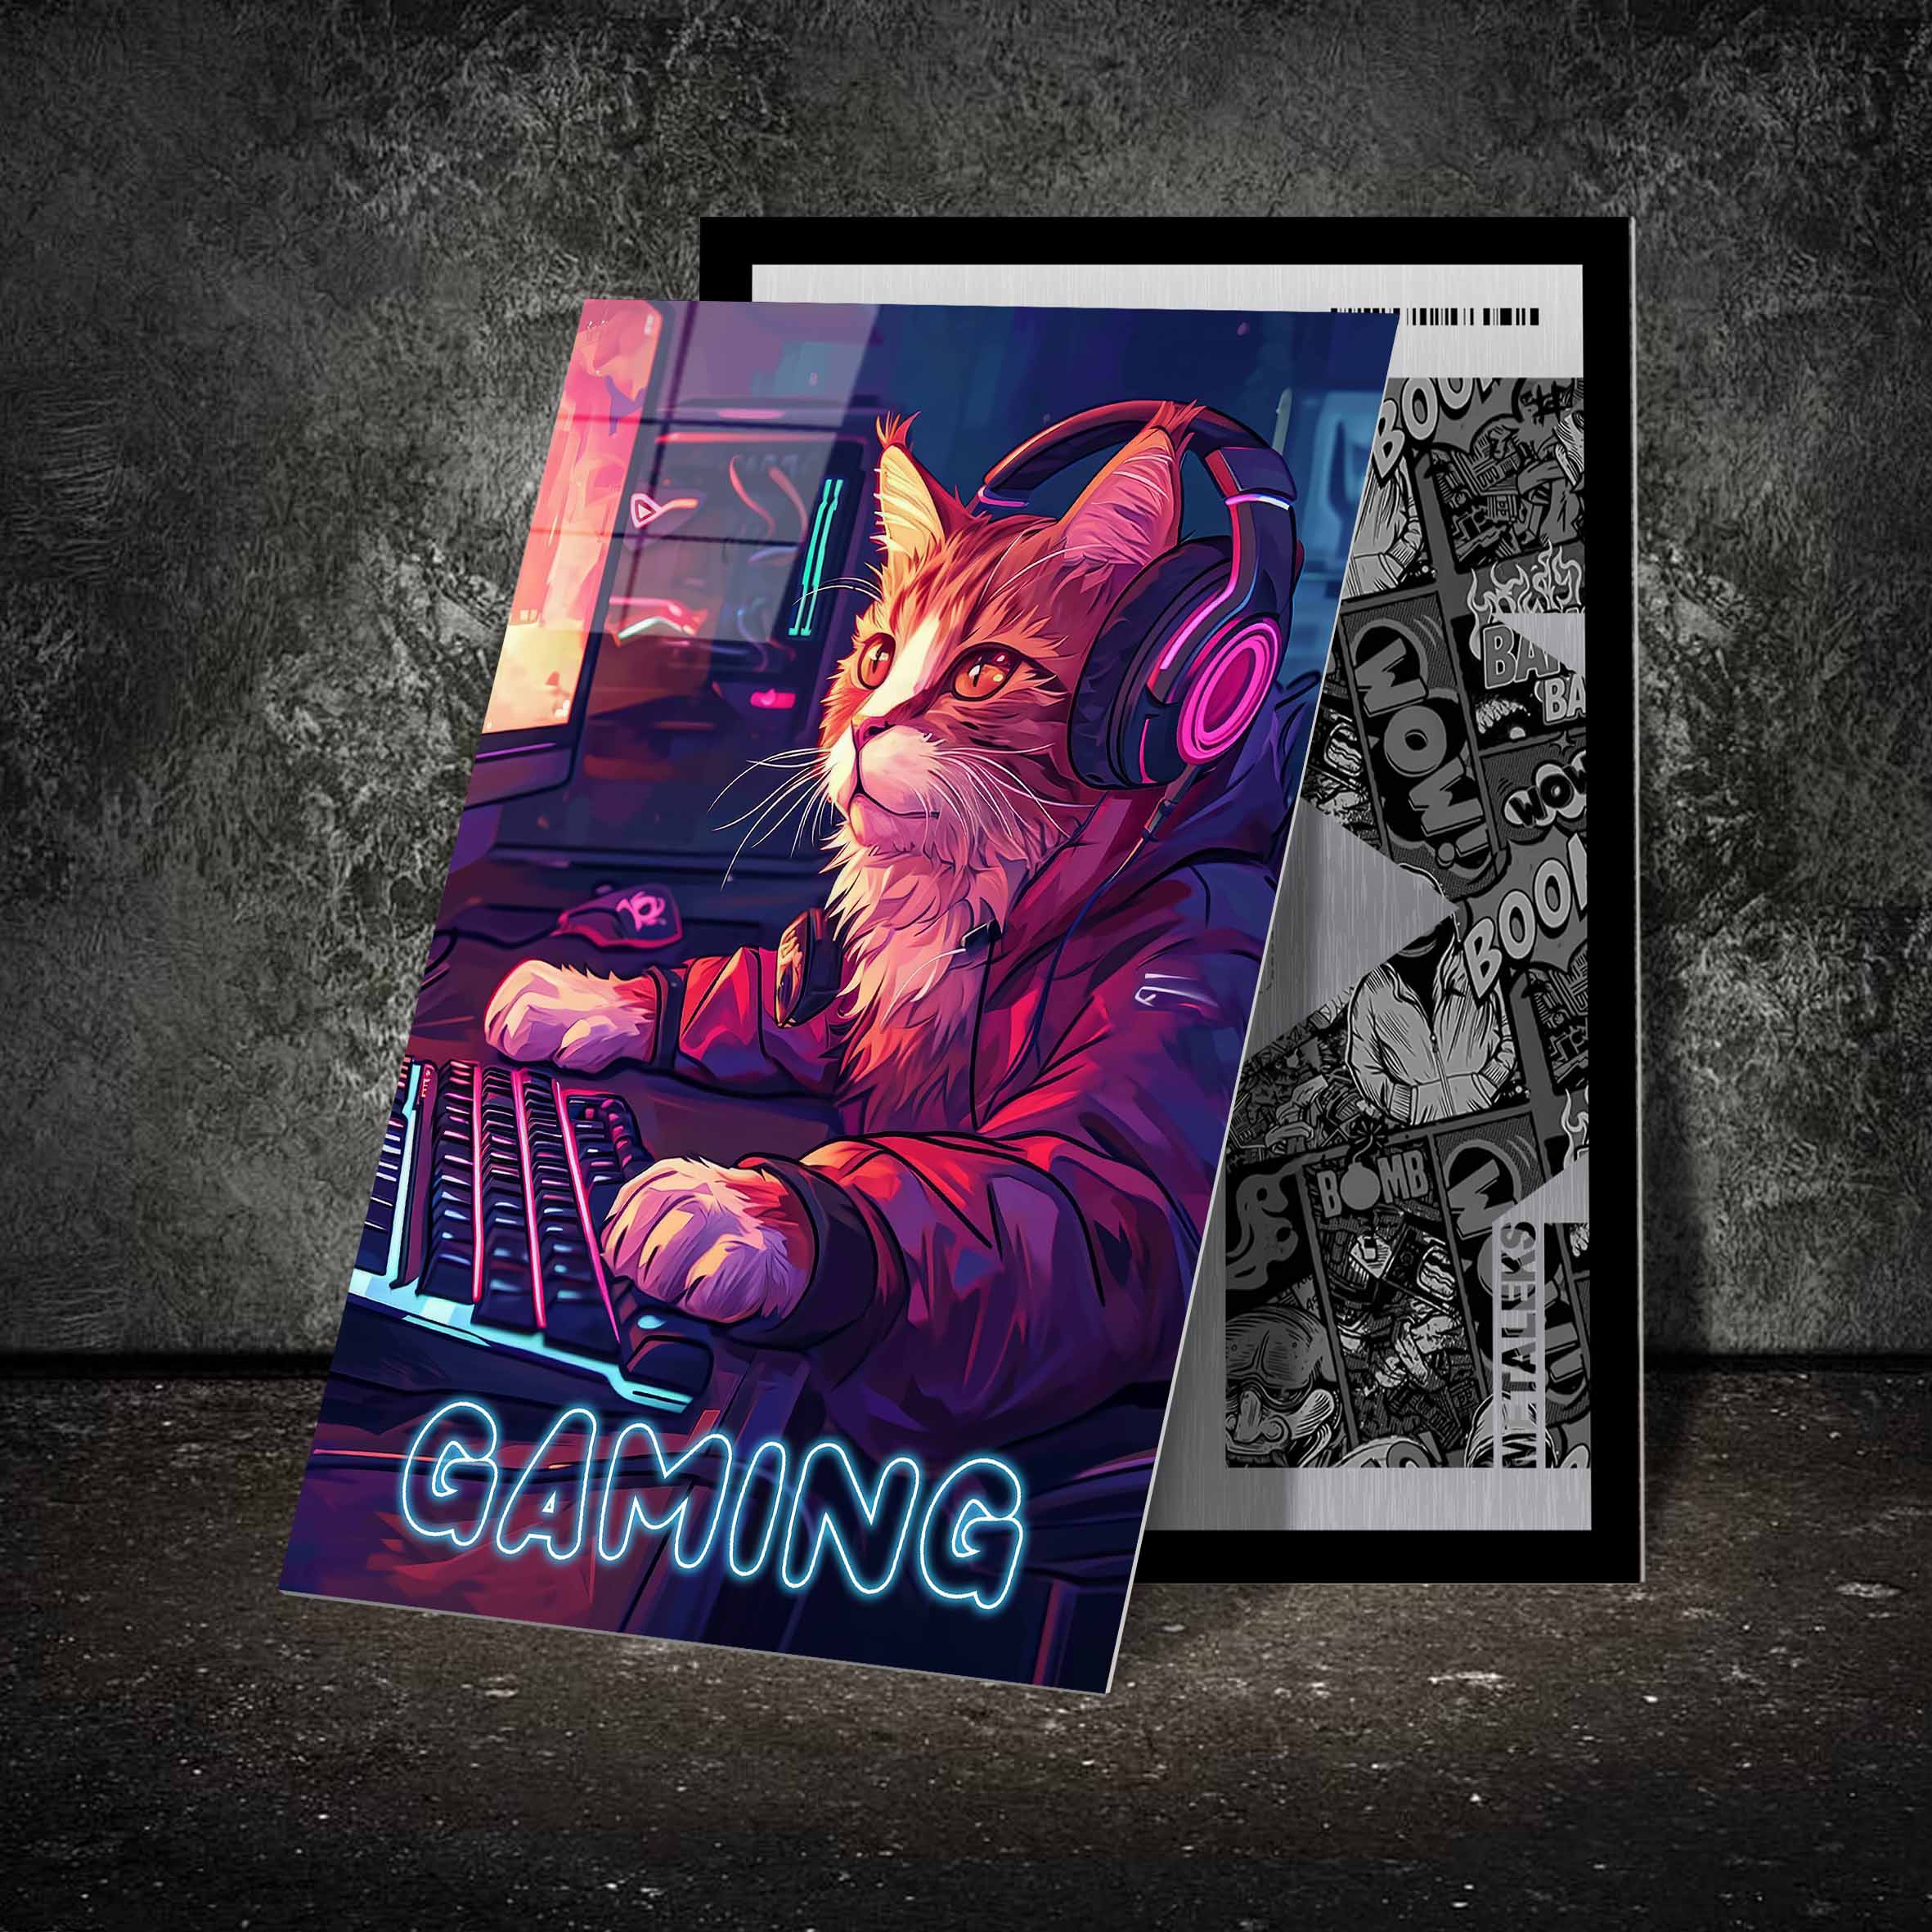 Cat Gaming-designed by @Moqotib